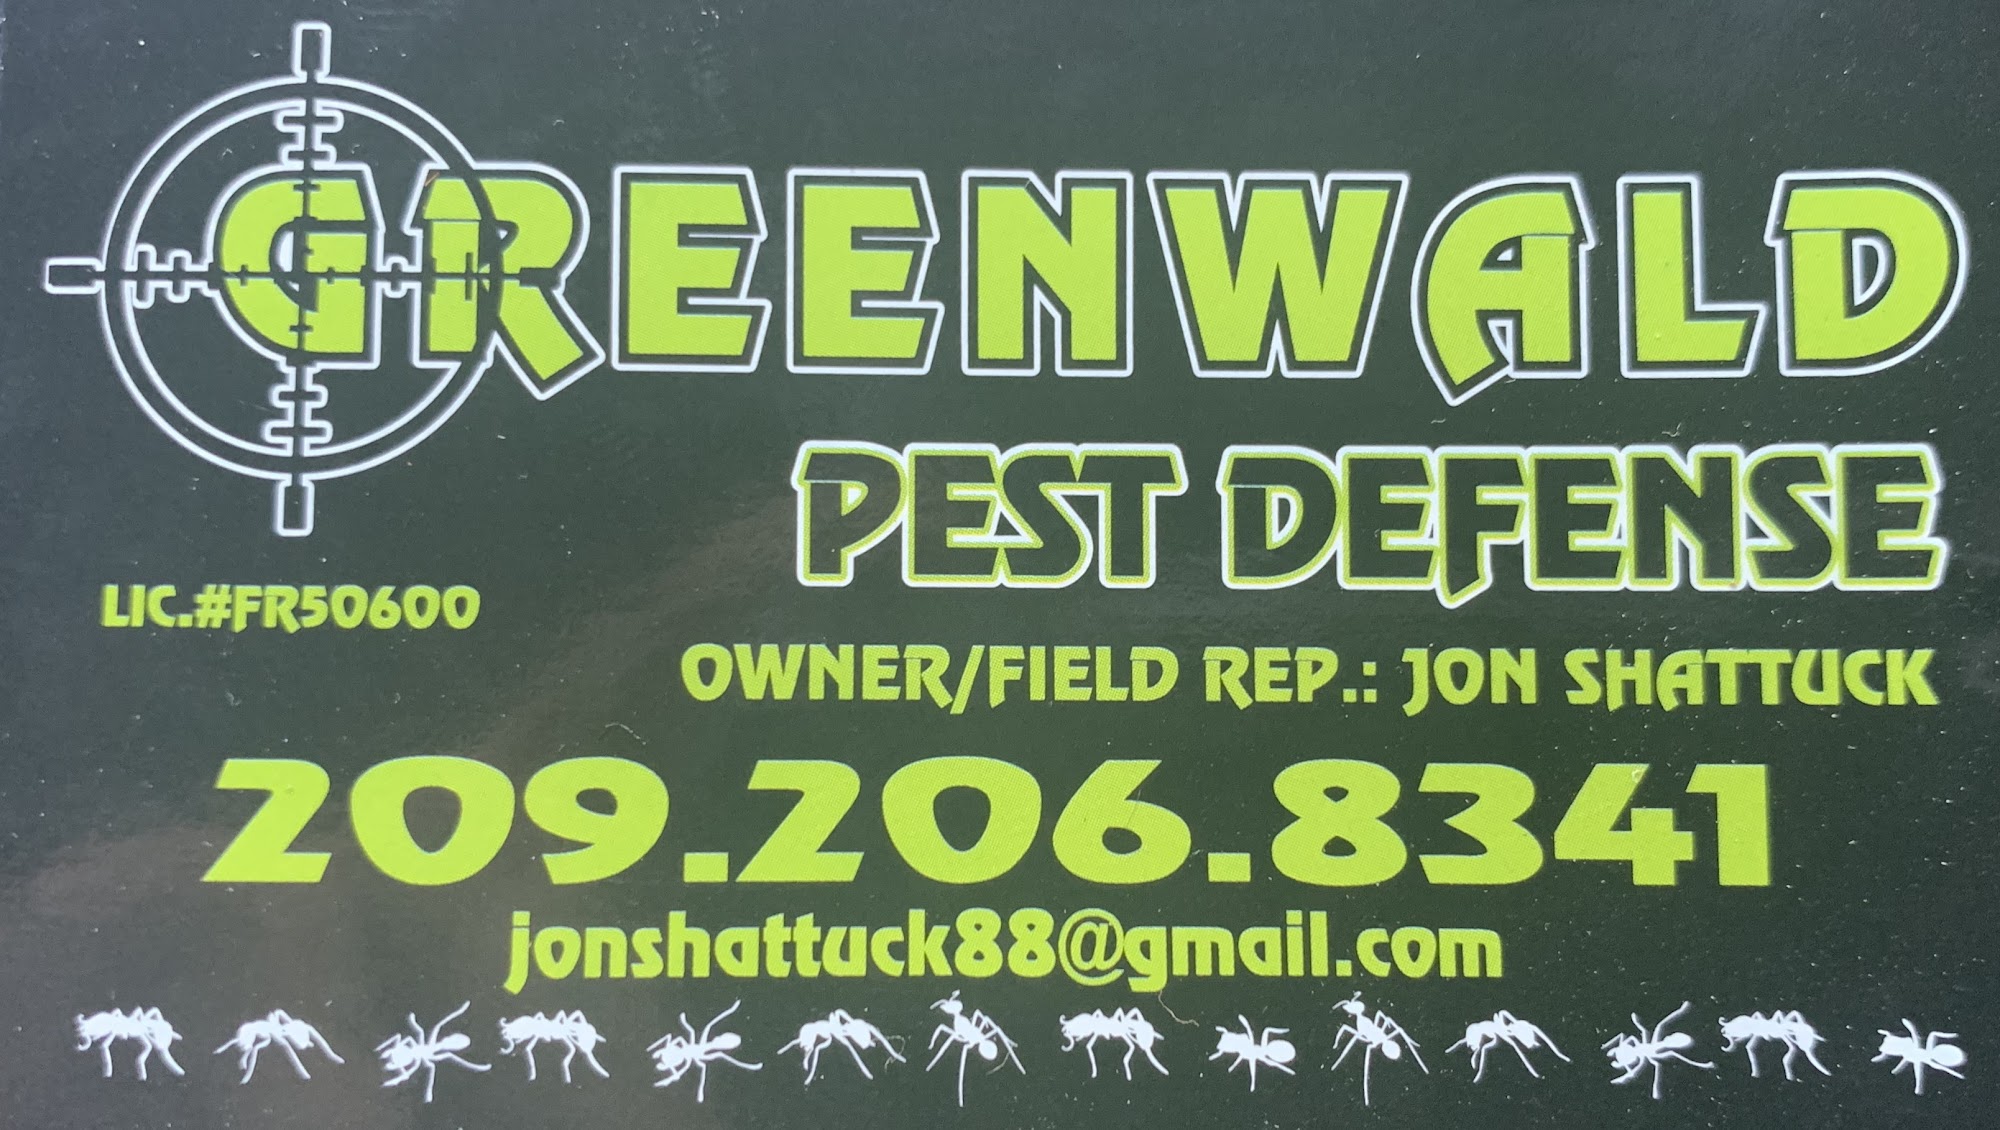 Greenwald Pest Defense 20555 Enchanted Ct, Tuolumne California 95379